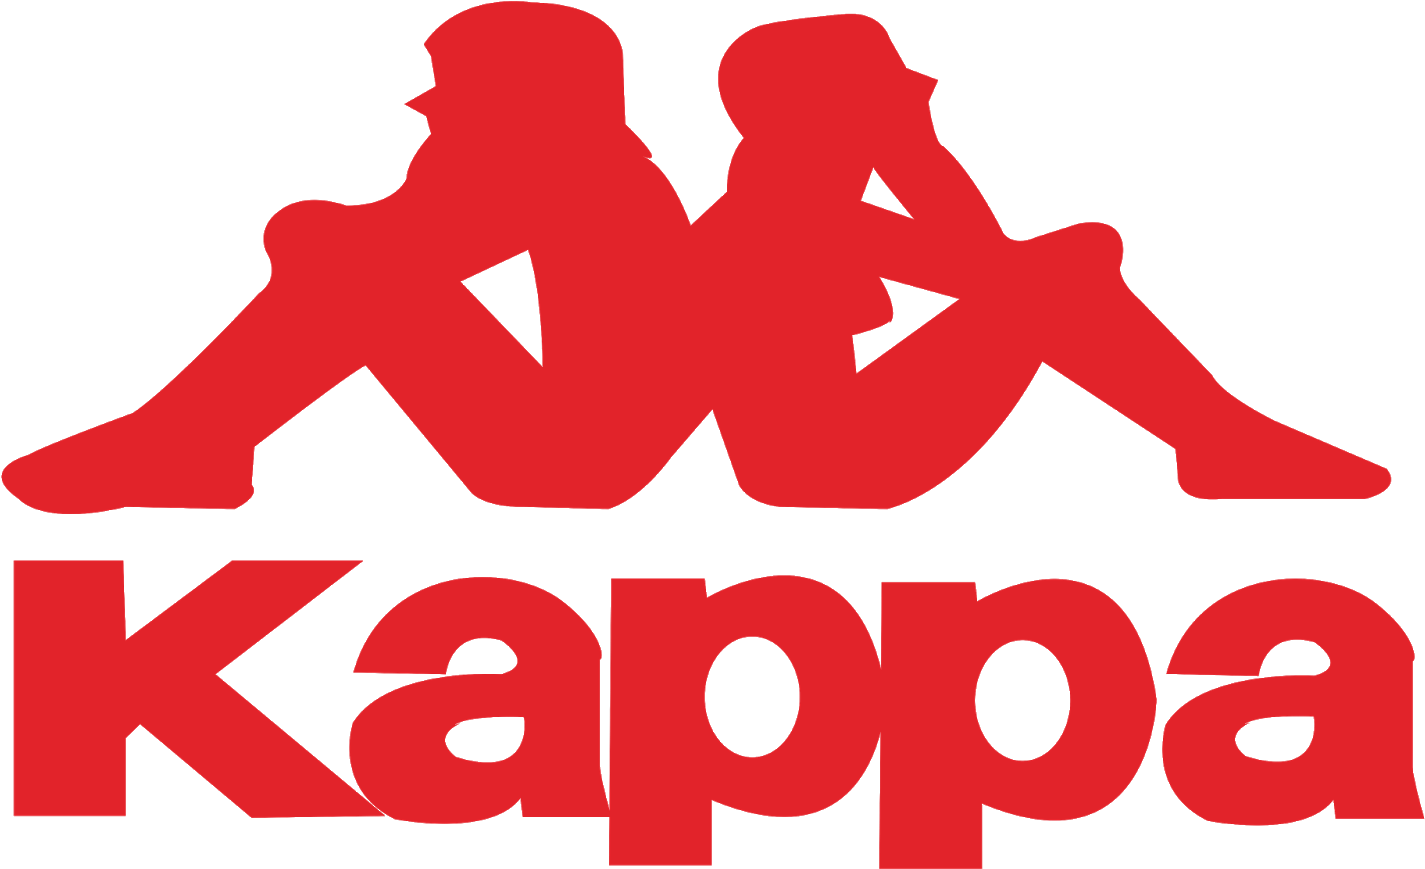 Download Kappa Cdr & Png Hd - Kappa Logo PNG Image No Background - PNGkey.com